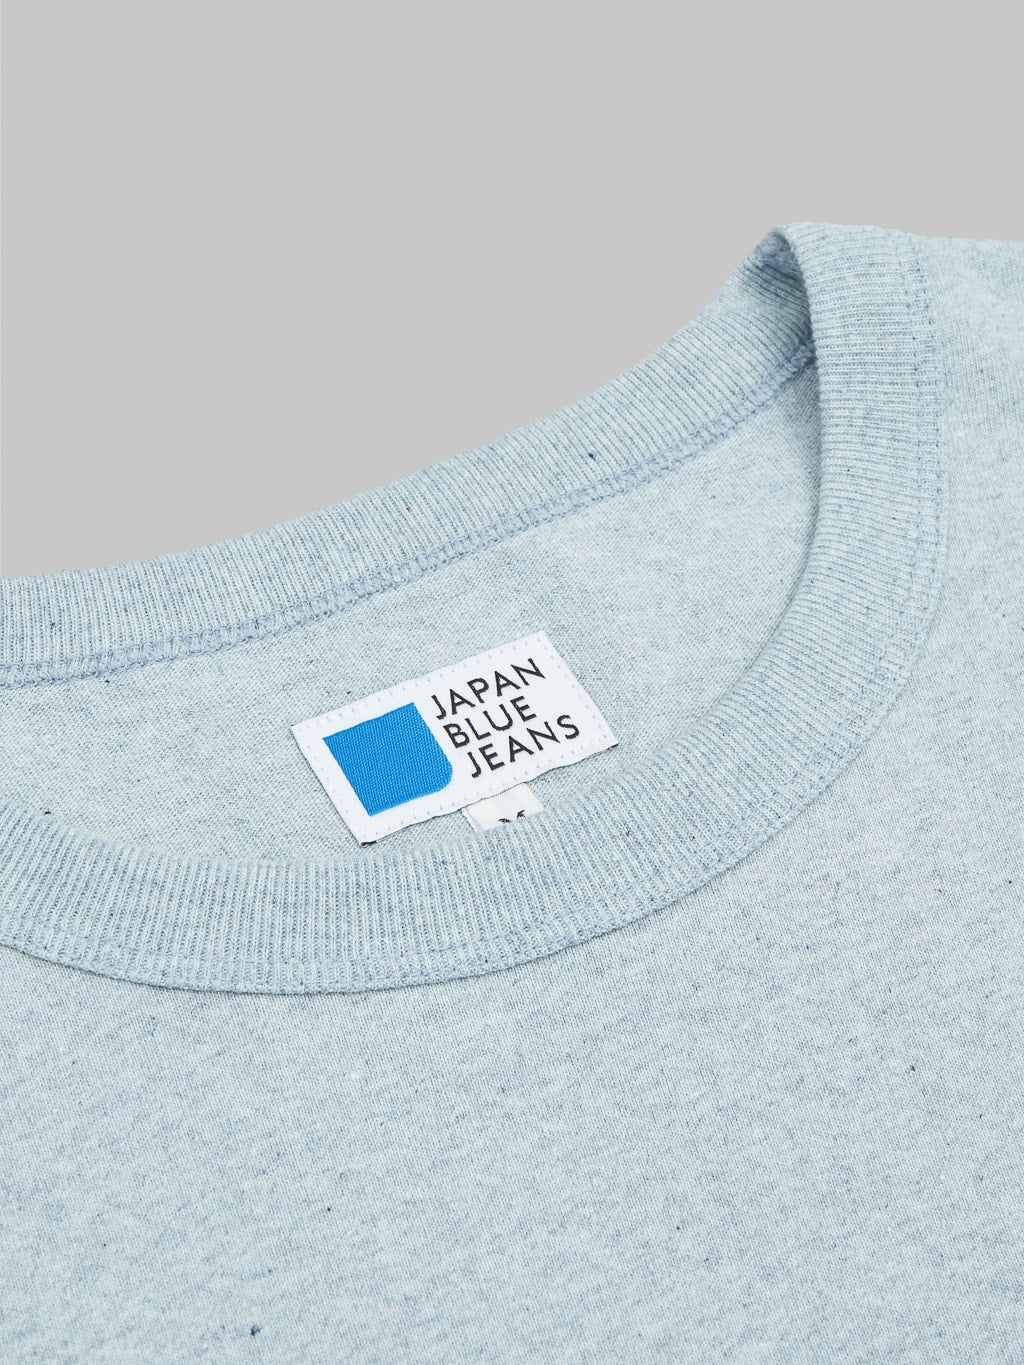 Japan Blue Recycled Denim Tshirt light Indigo interior label